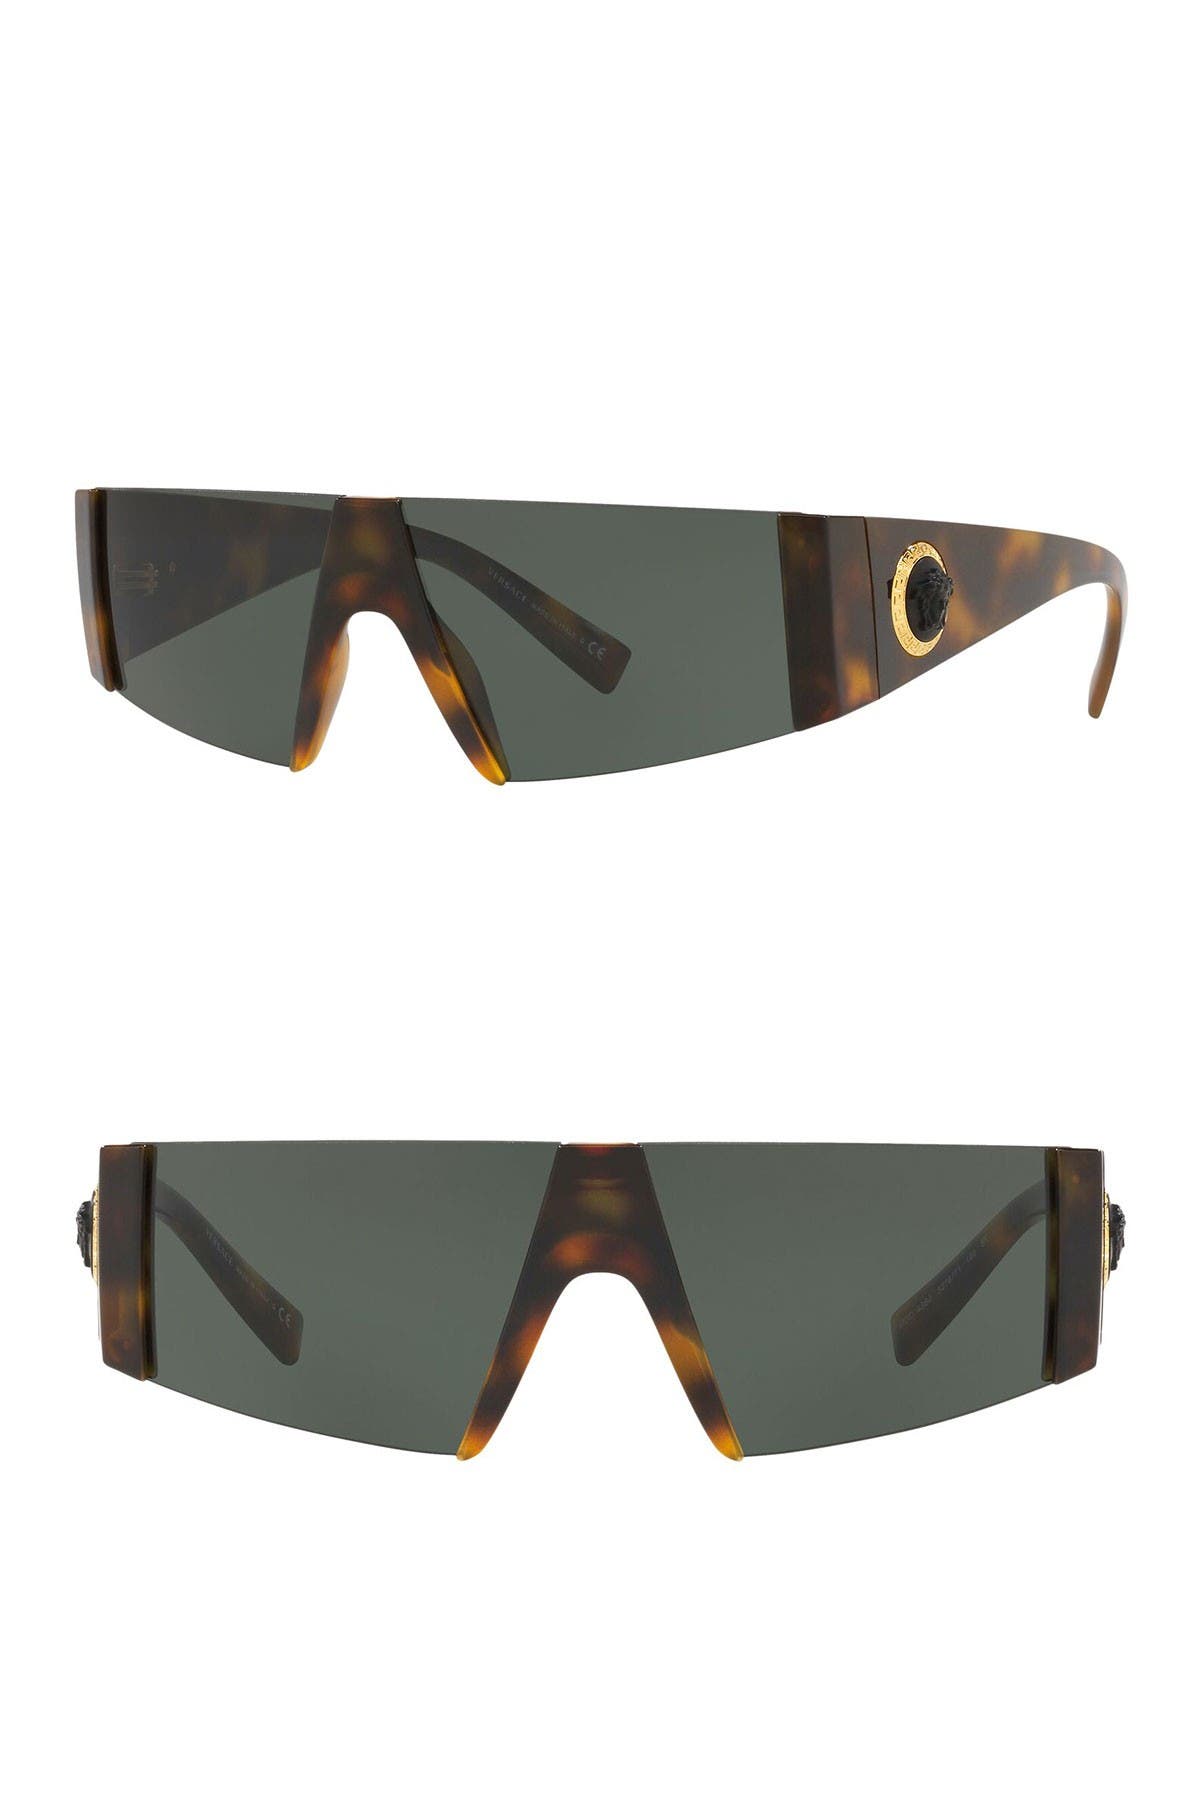 nordstrom rack versace sunglasses